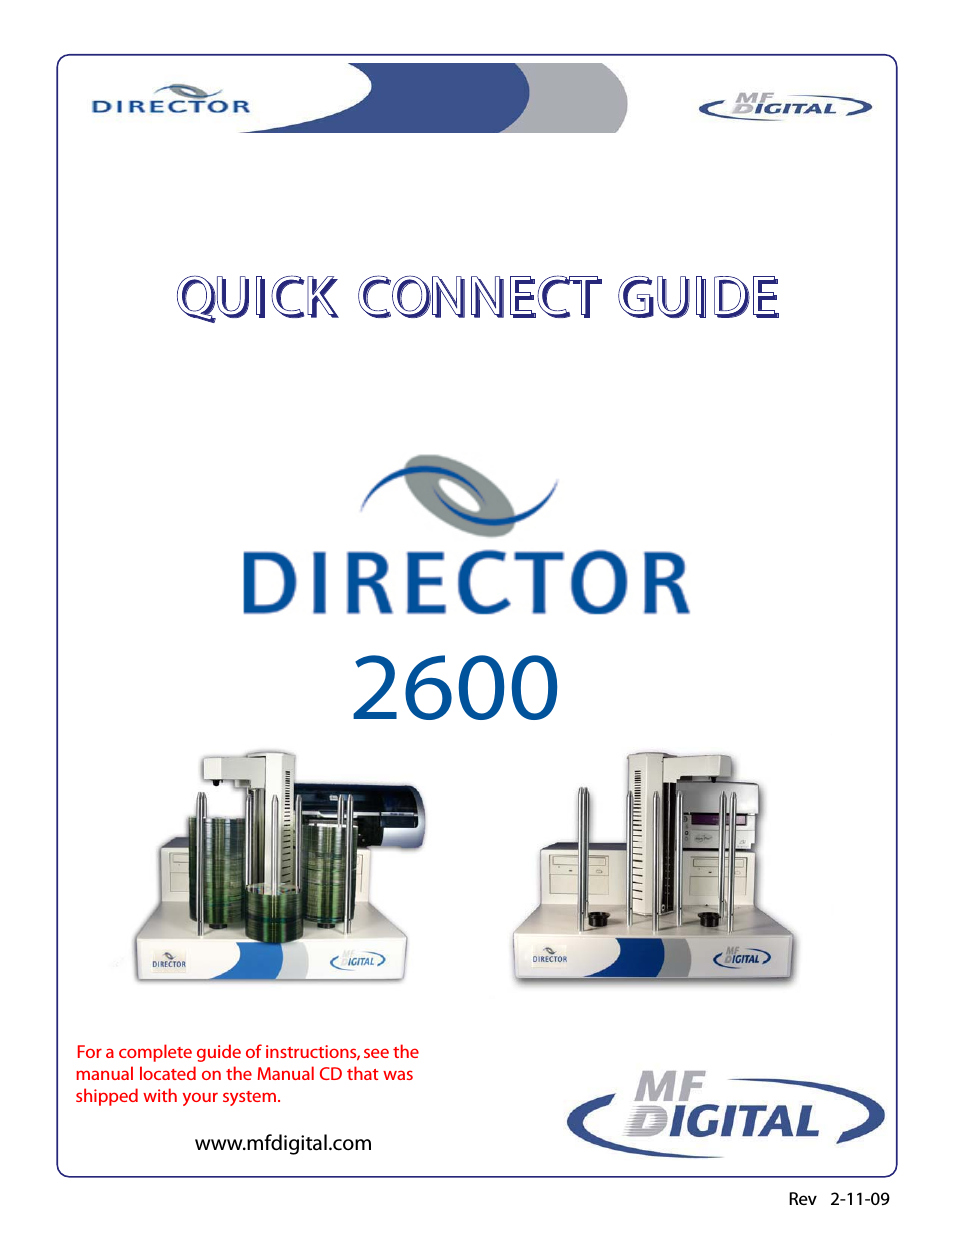 DIRECTOR 2600